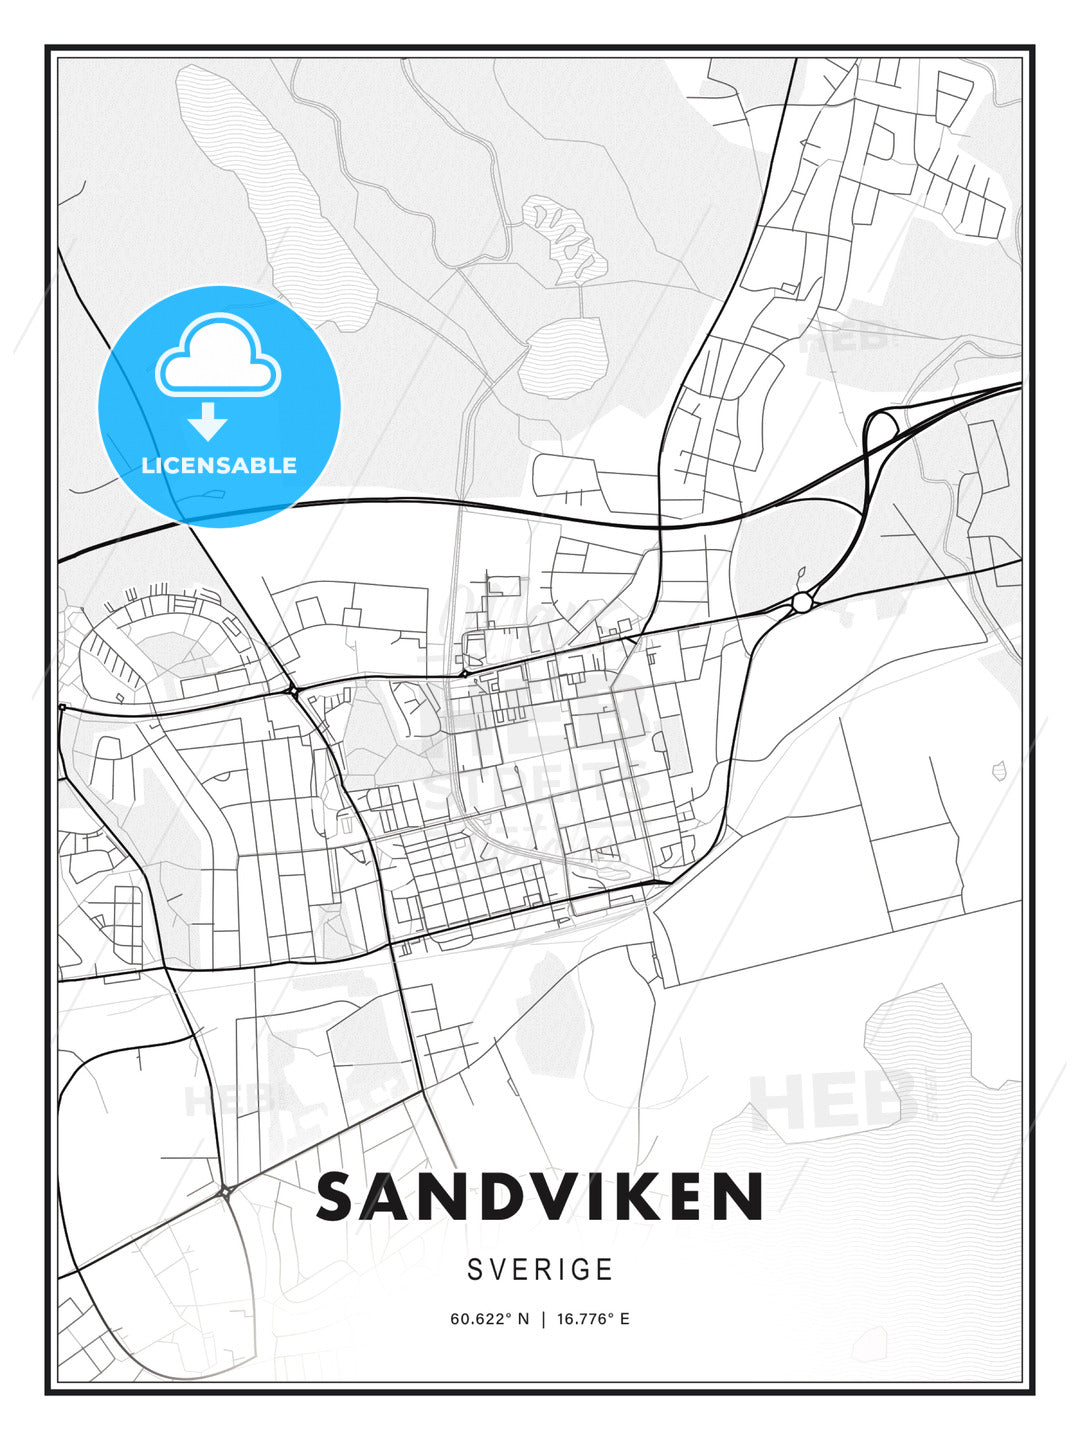 Sandviken, Sweden, Modern Print Template in Various Formats - HEBSTREITS Sketches